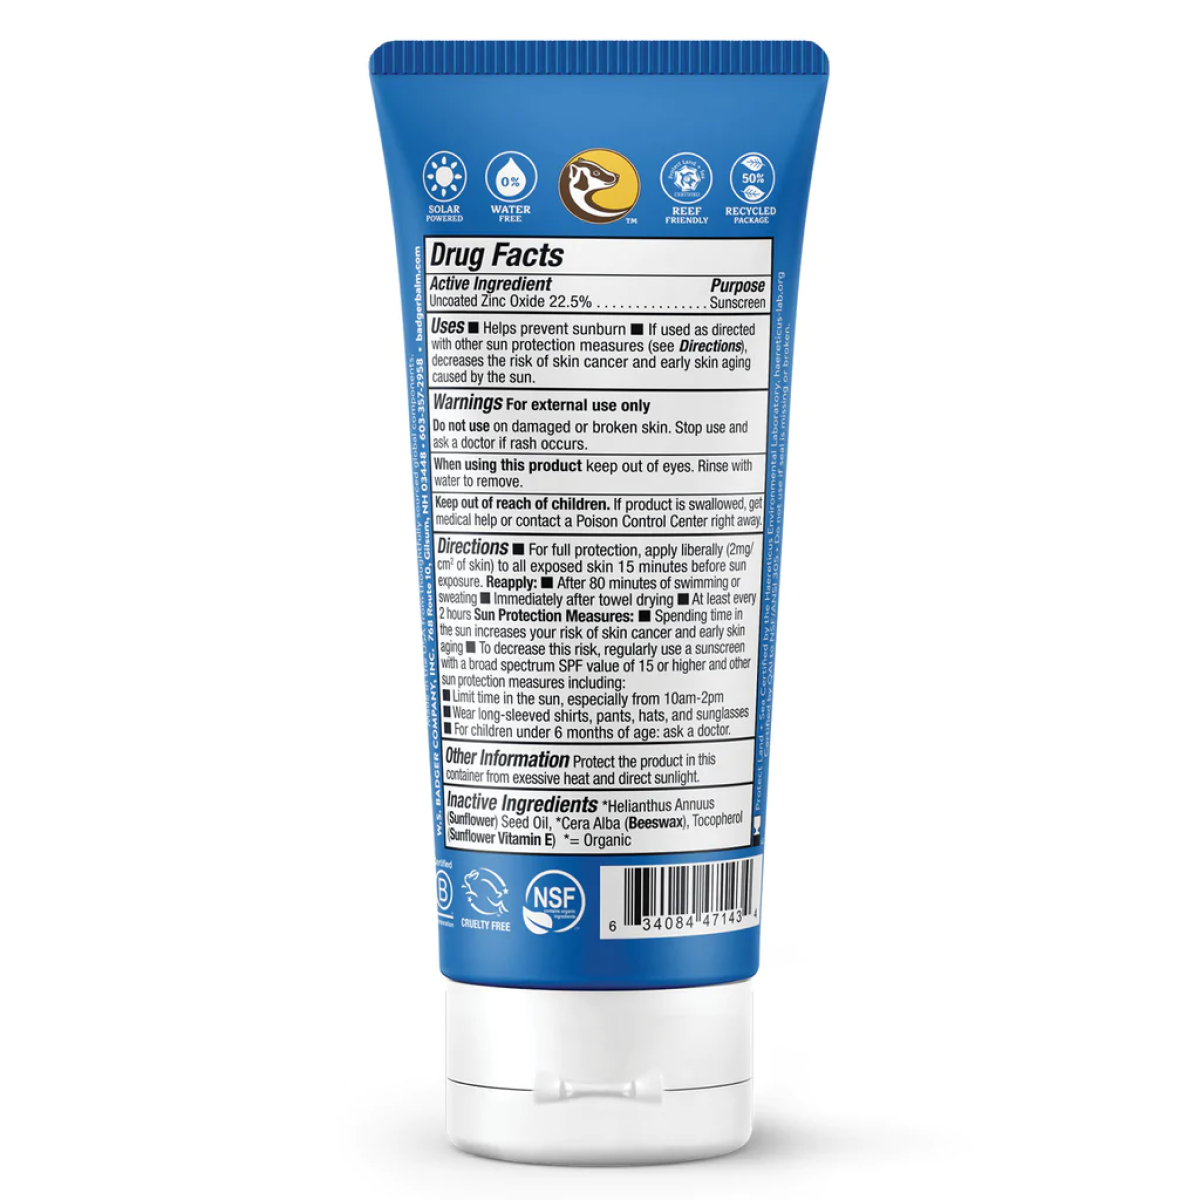 Badger Sport Mineral Sunscreen Cream - SPF 40